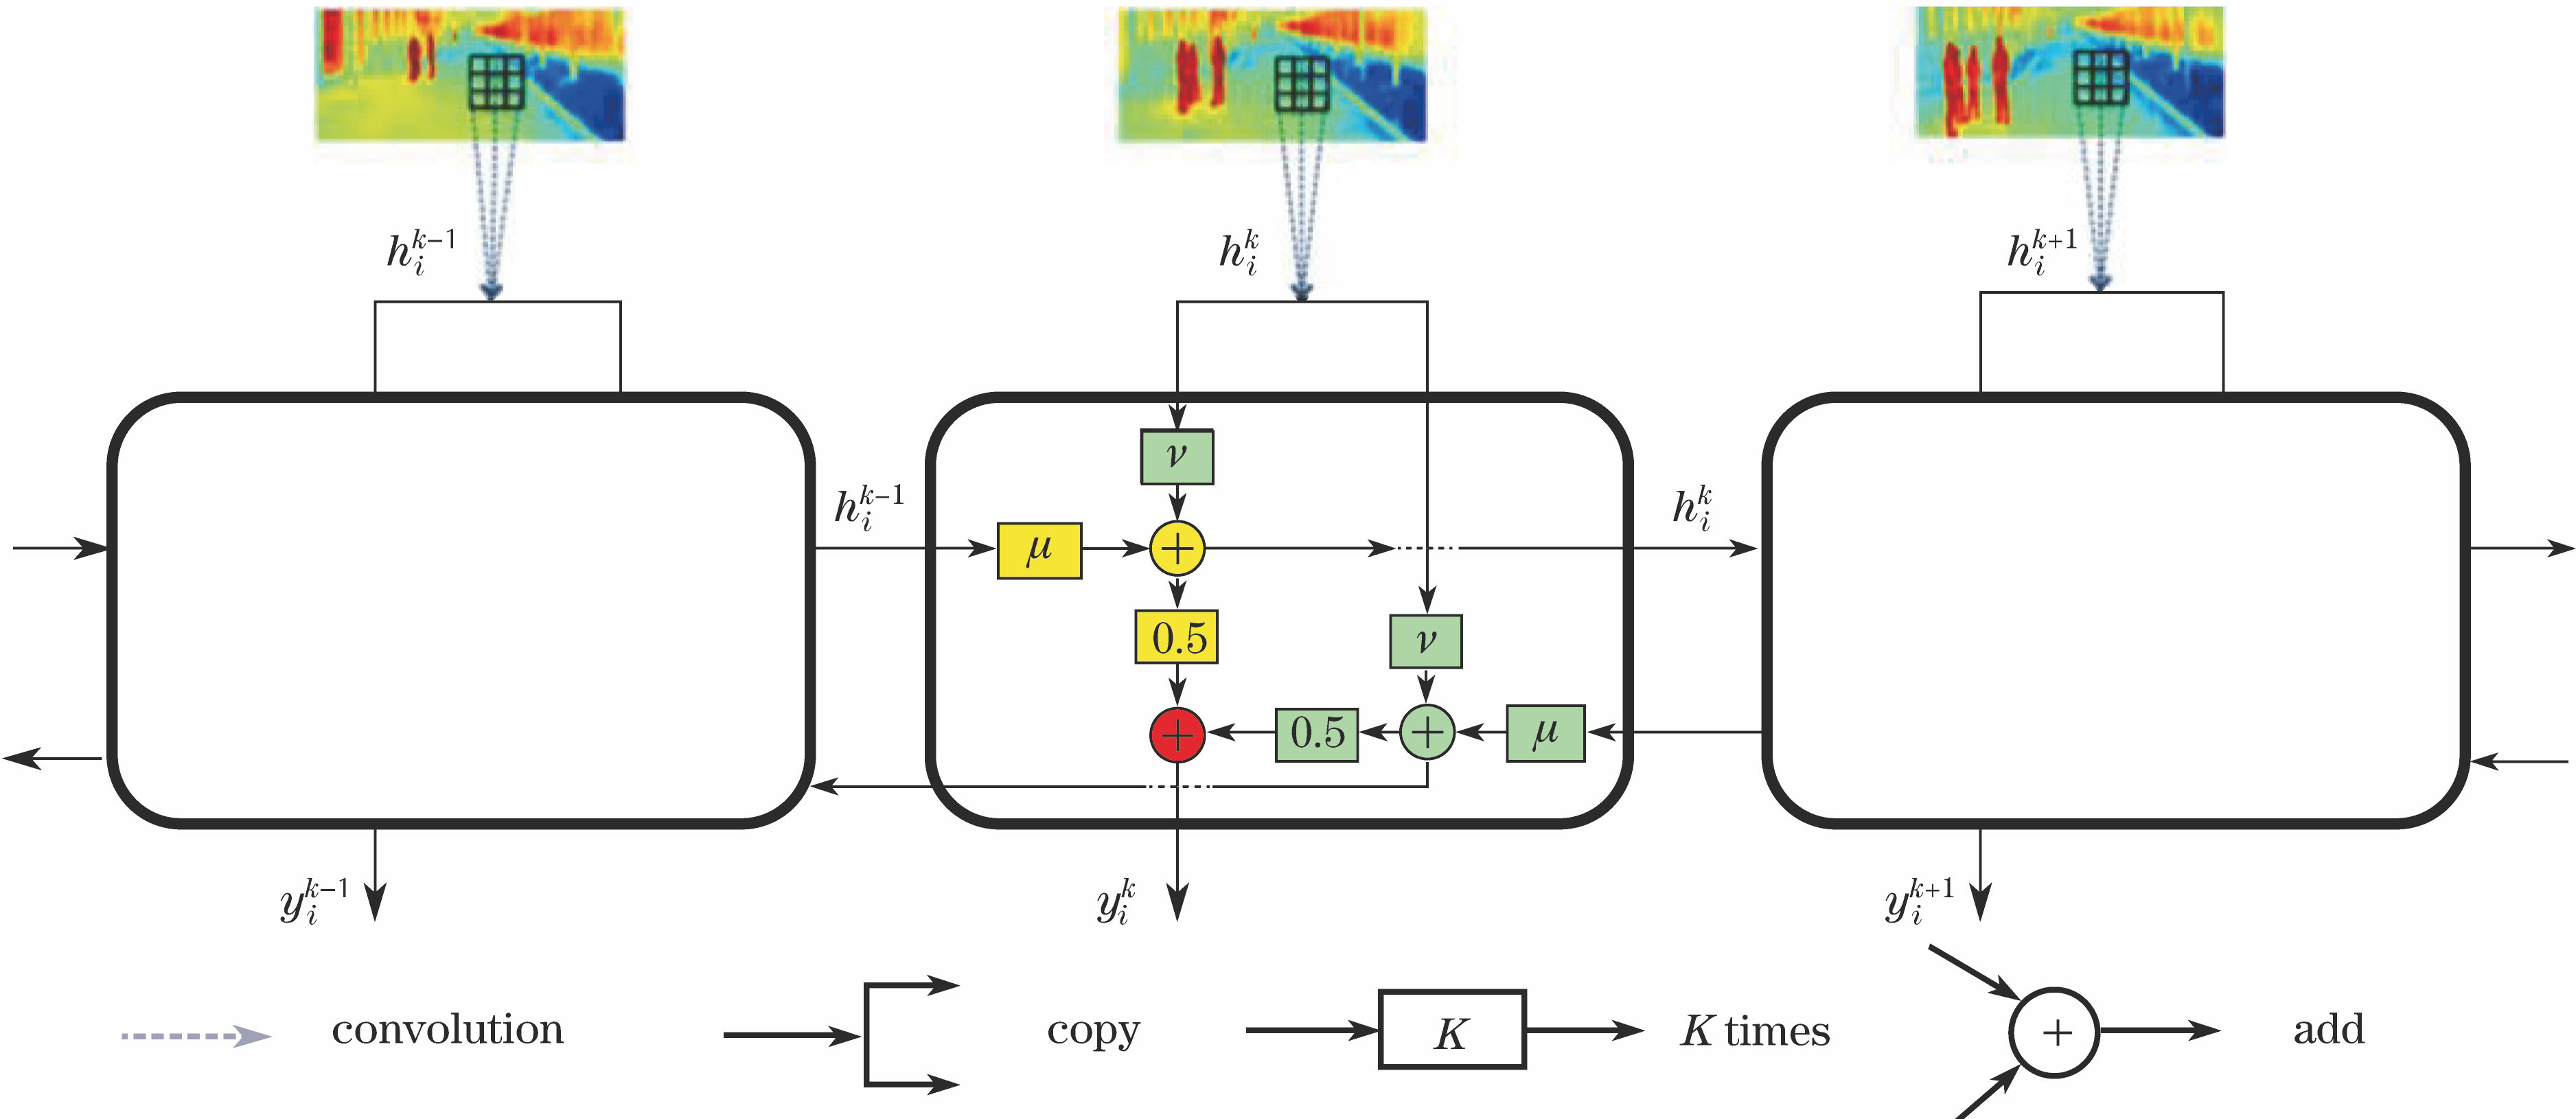 Mechanism of bi-recursive convolution